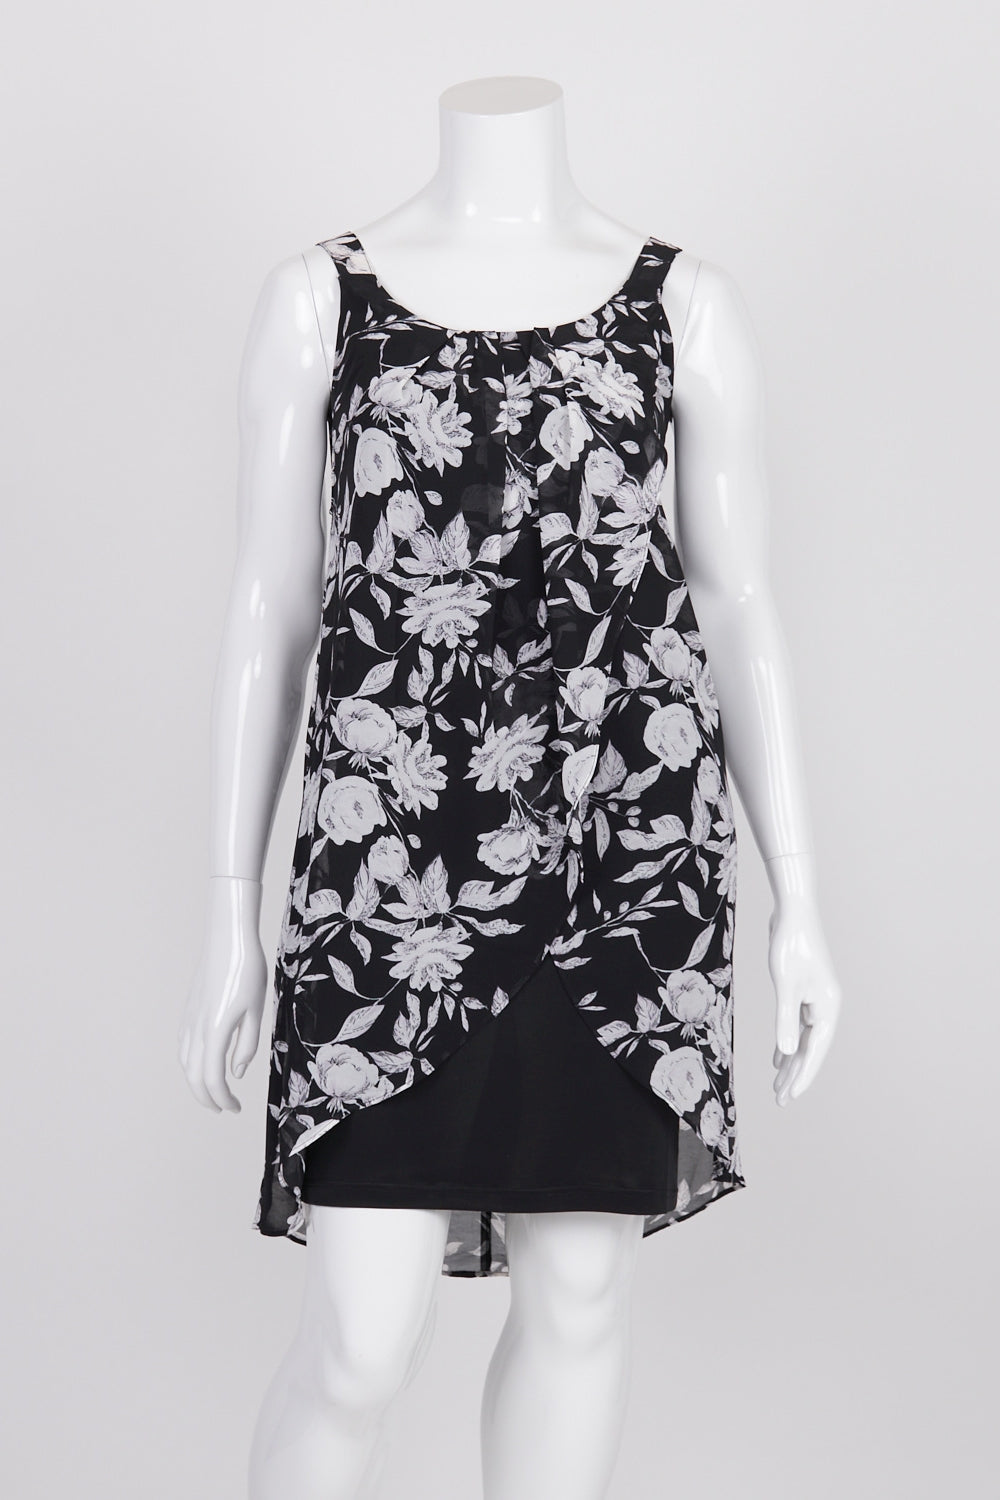 Leoni Black And White Floral Dress 12